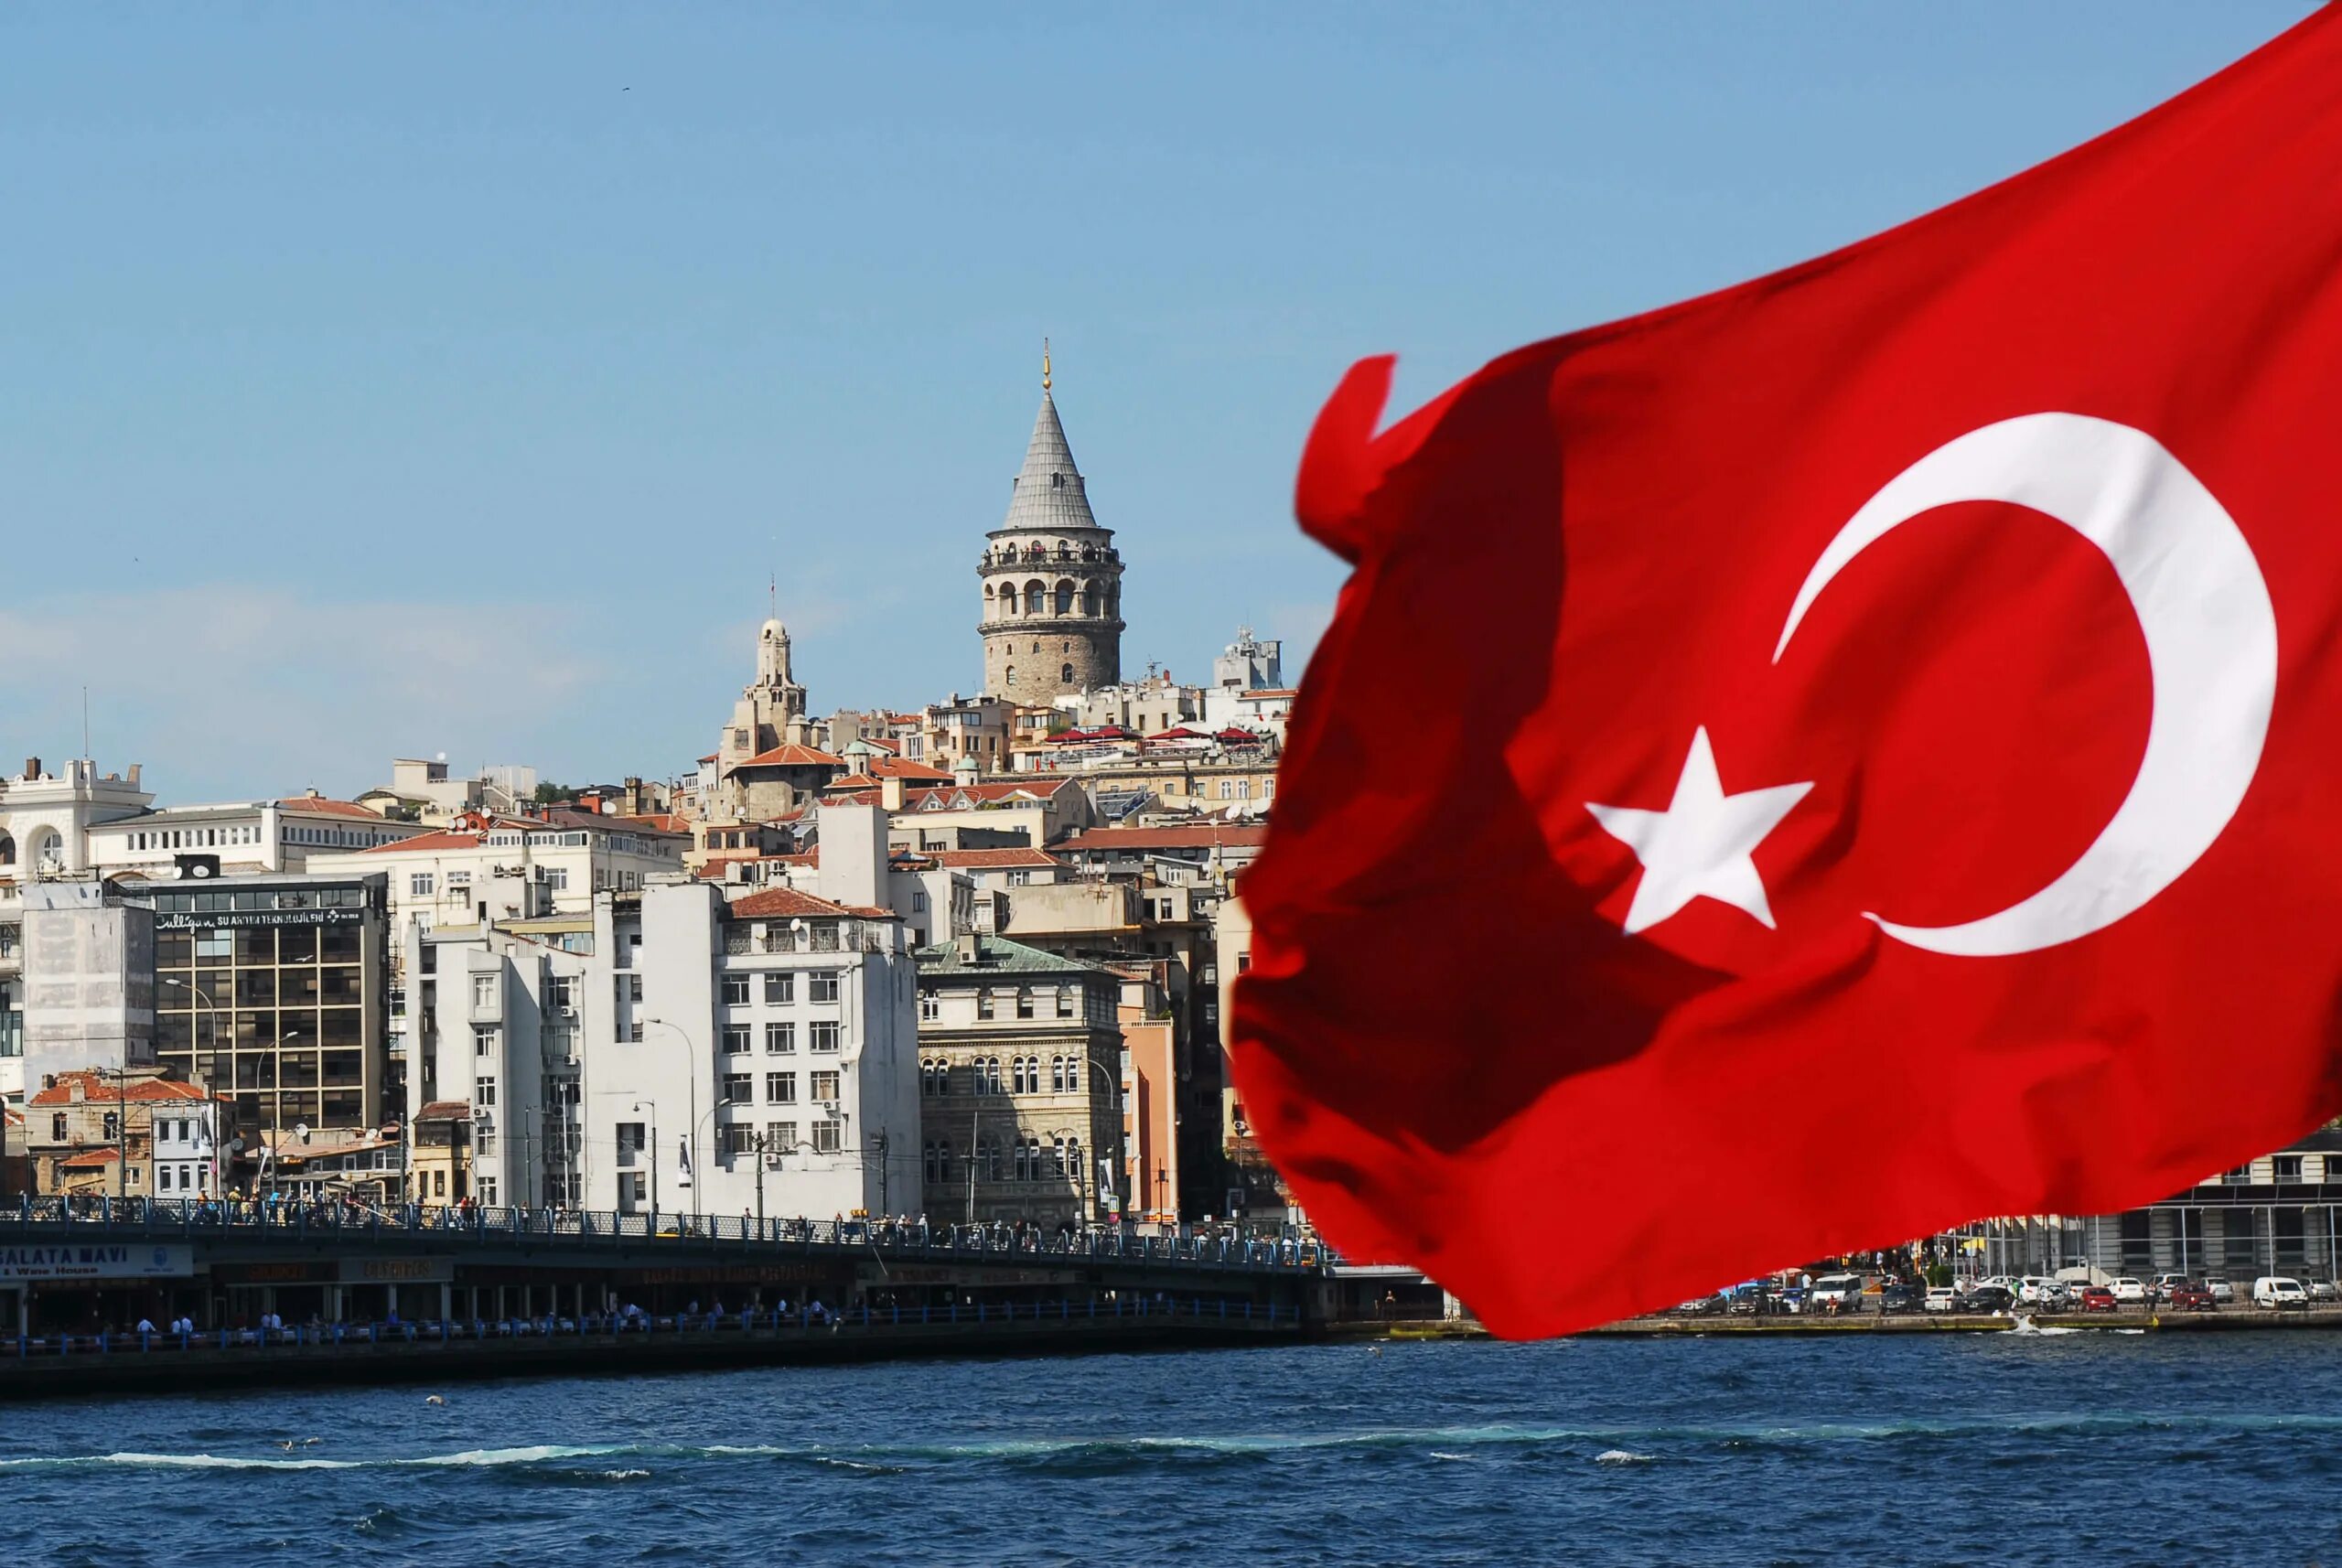 Turkey турция. Флаг Турции. Турция Стамбул флаг. Анкара Турция флаг. Турецкий флаг Стамбул.